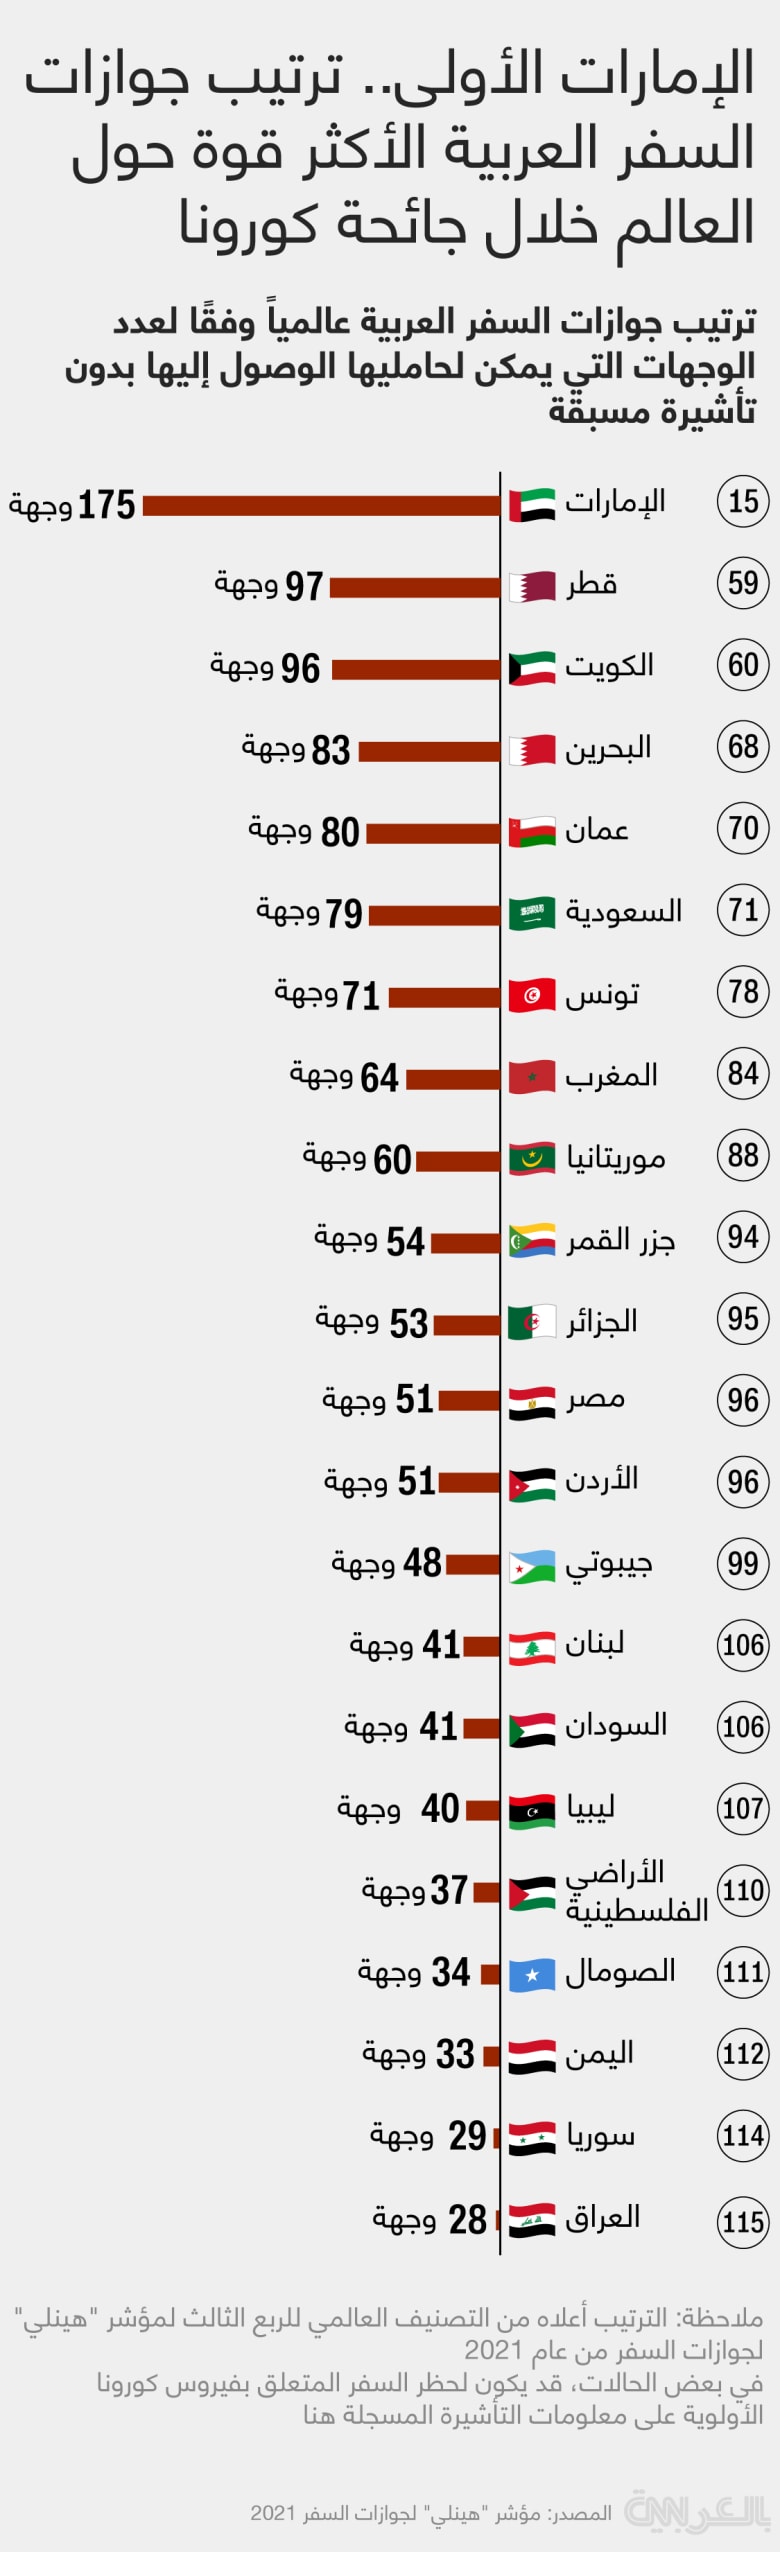 Arab-Passports-Ranking-2021